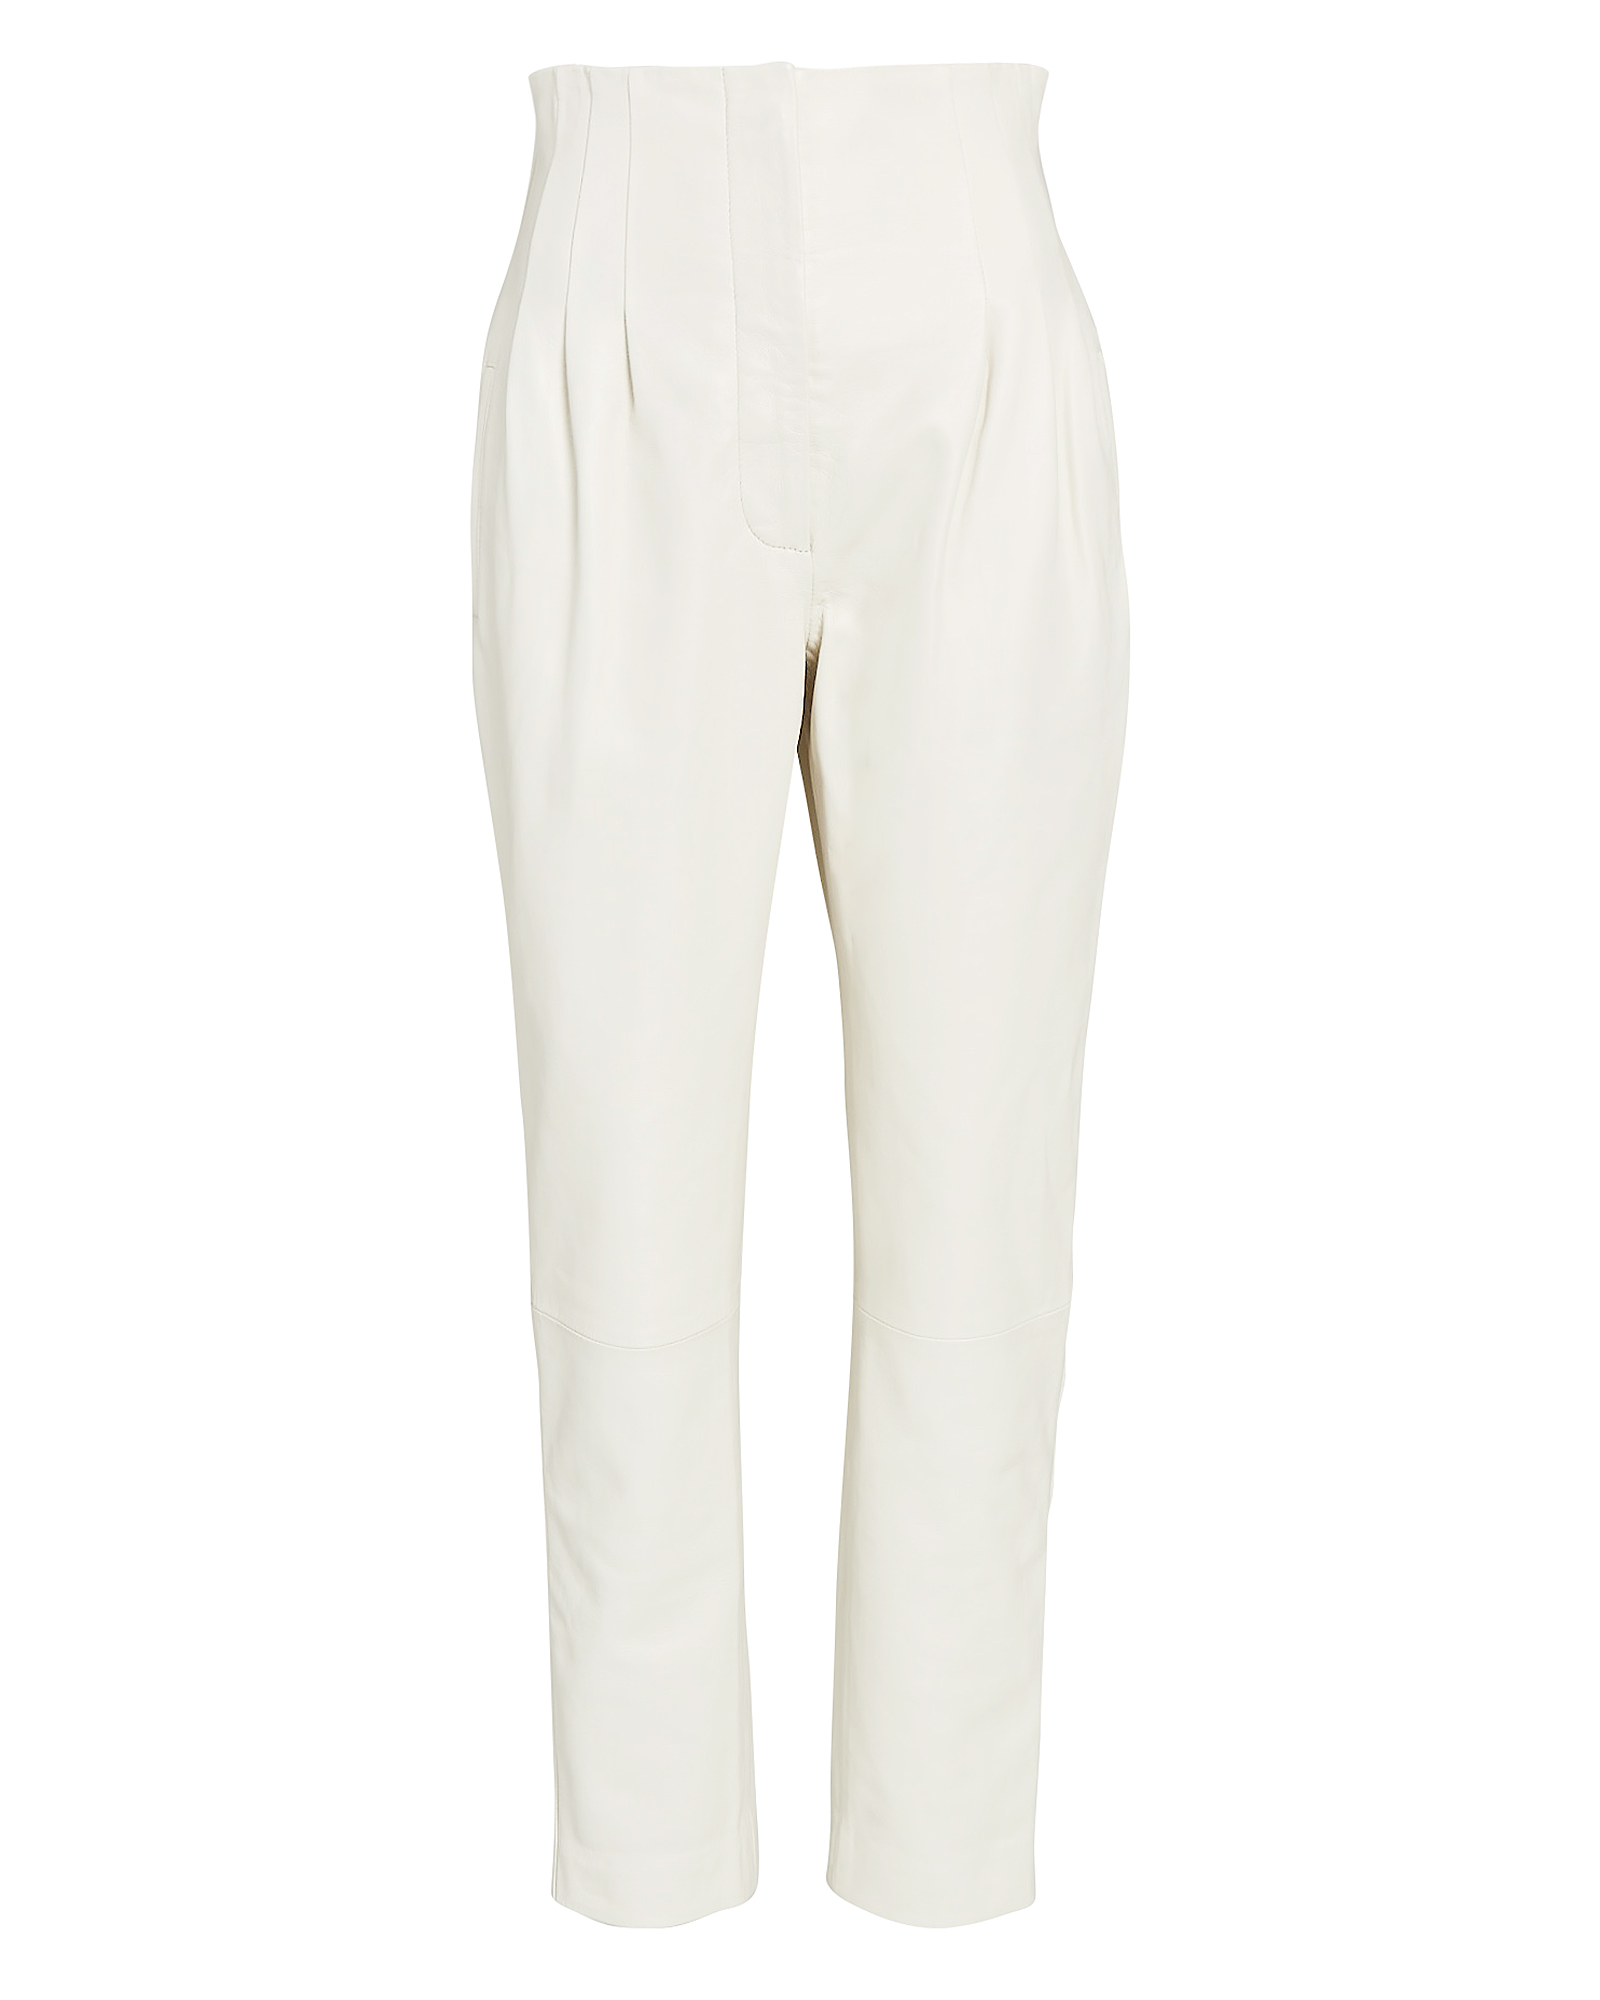 Alberta Ferretti Tapered High-Waist White Leather Pants | INTERMIX®